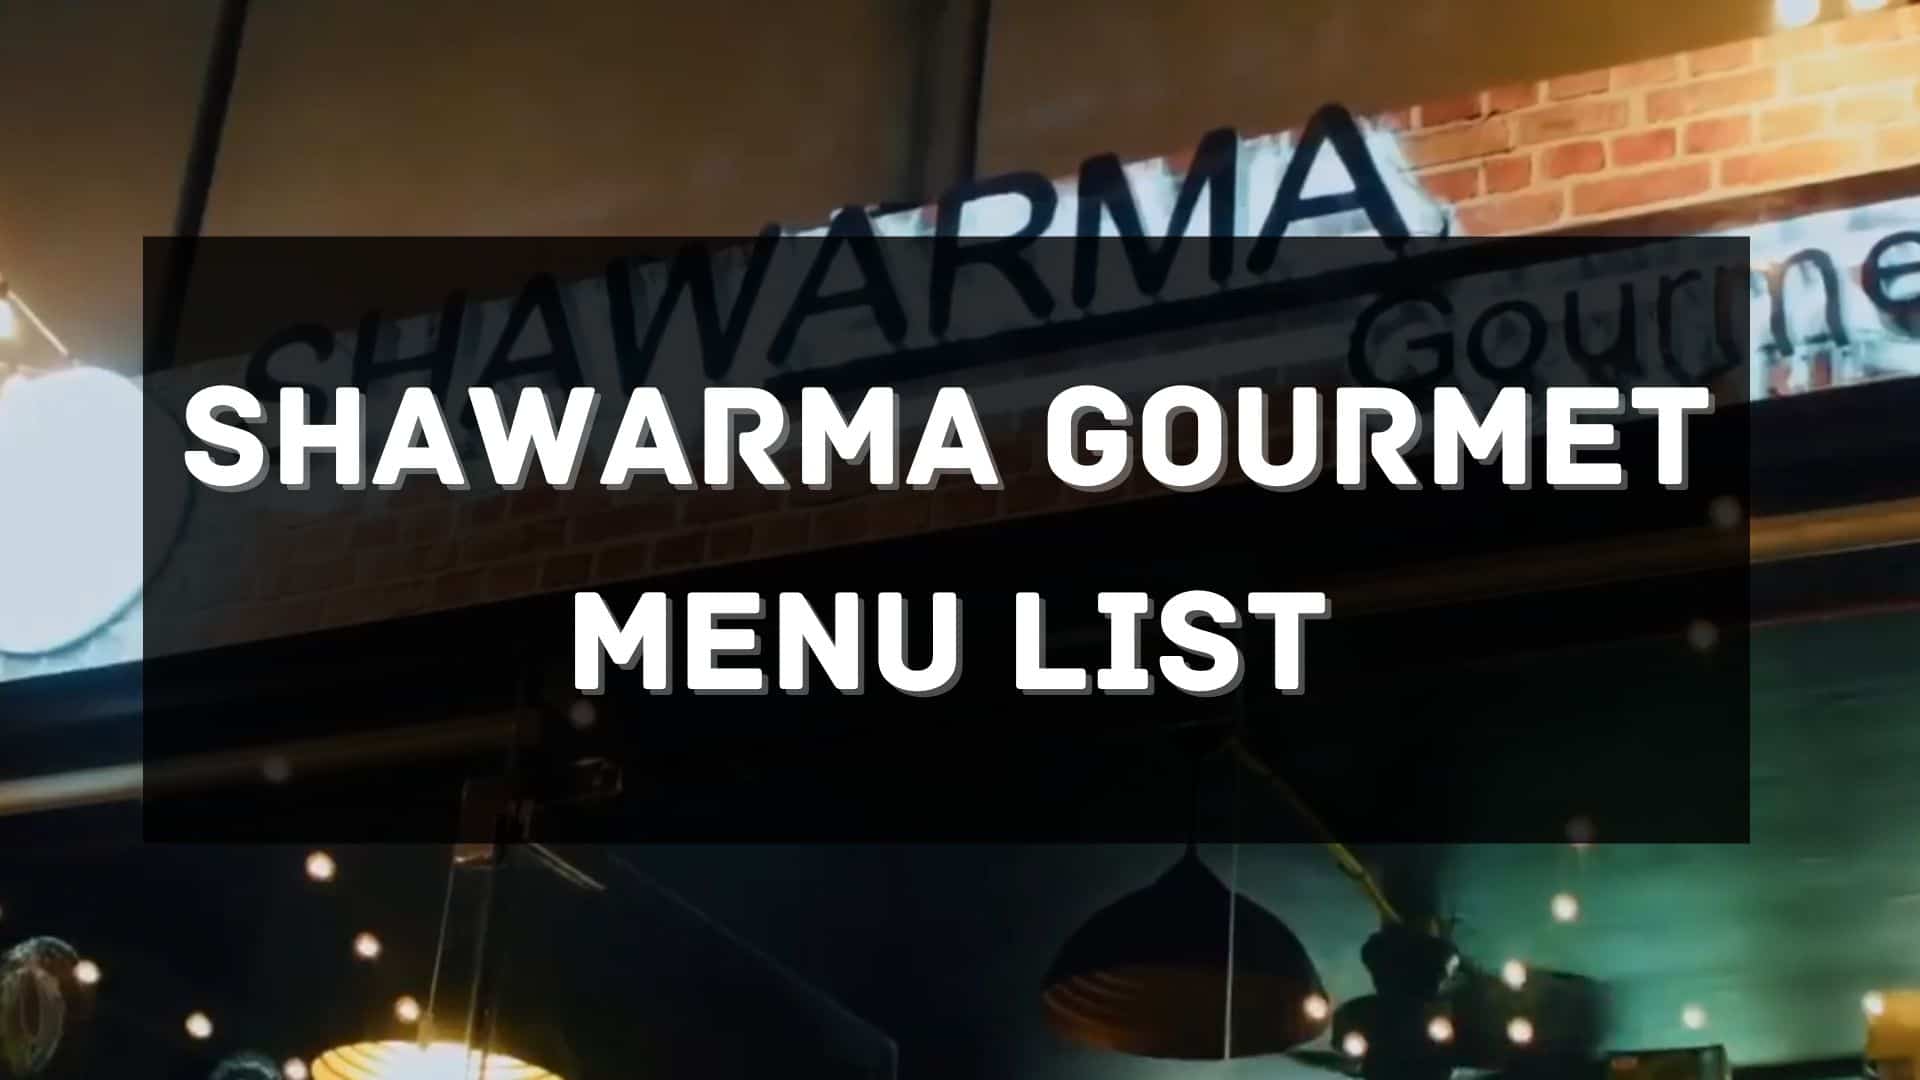 Shawarma gourmet menu prices philippines